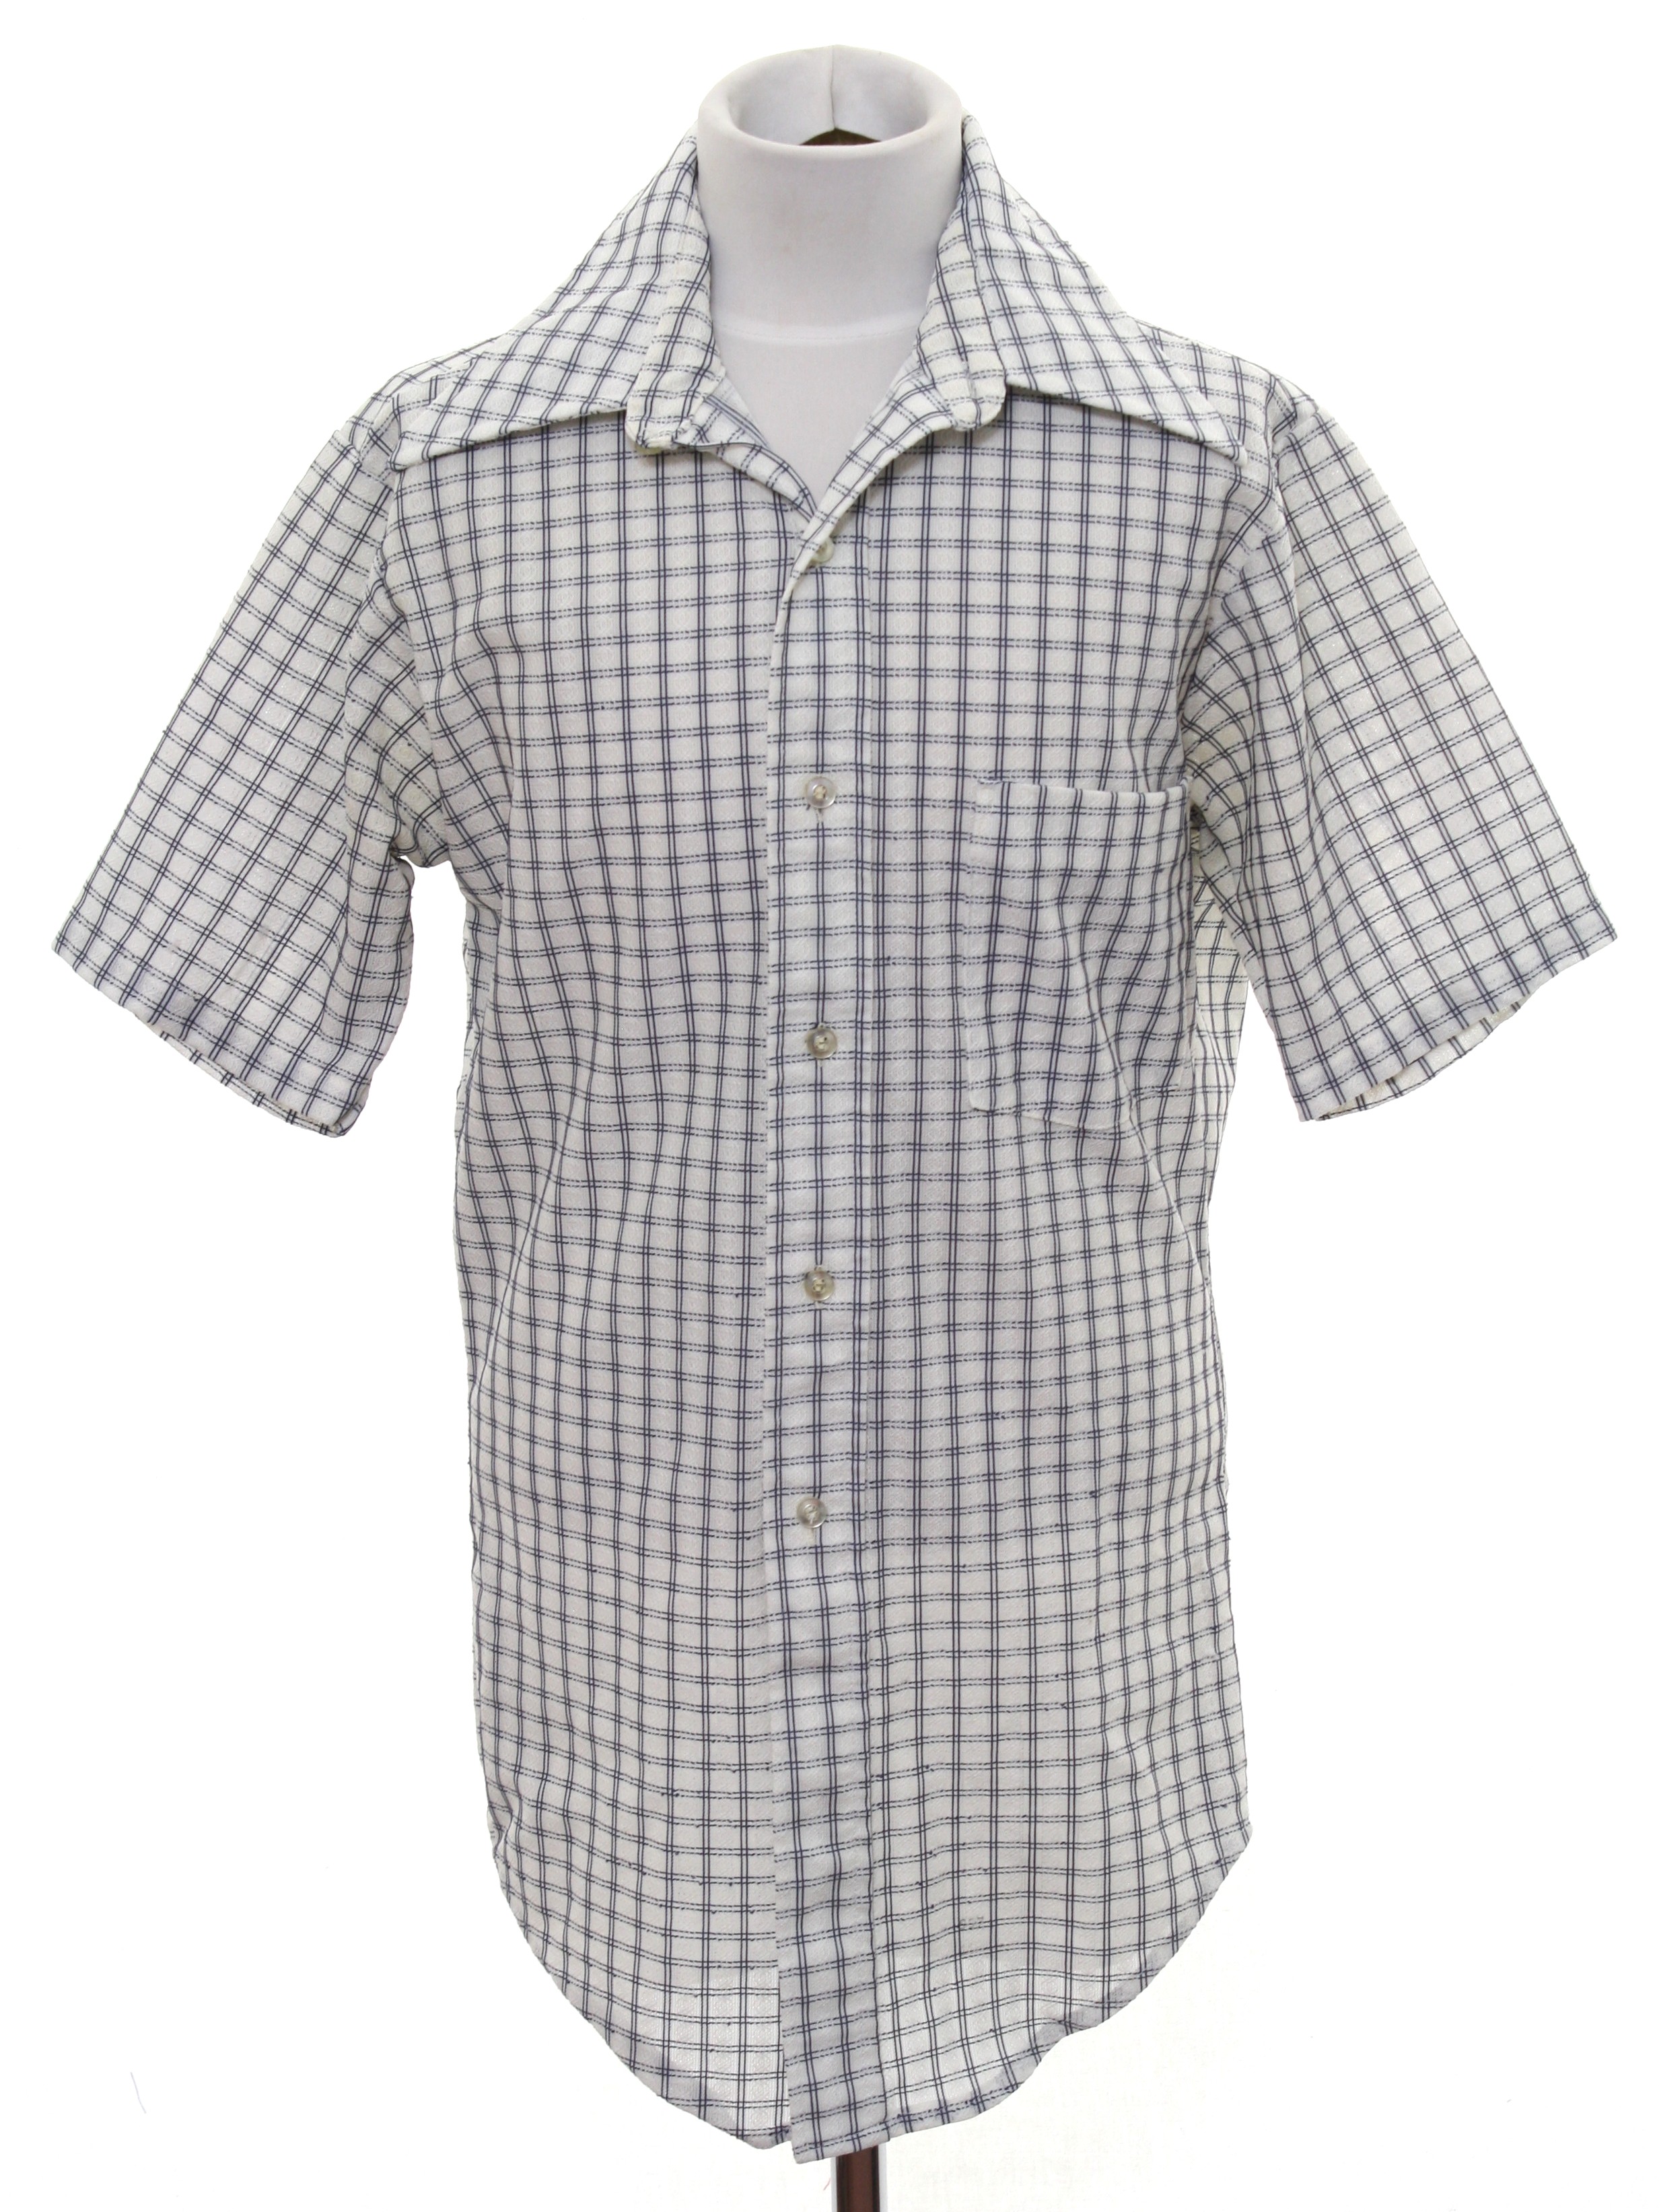 Retro 70s Shirt (Sutton) : 70s -Sutton- Boys white and dark blue nylon ...